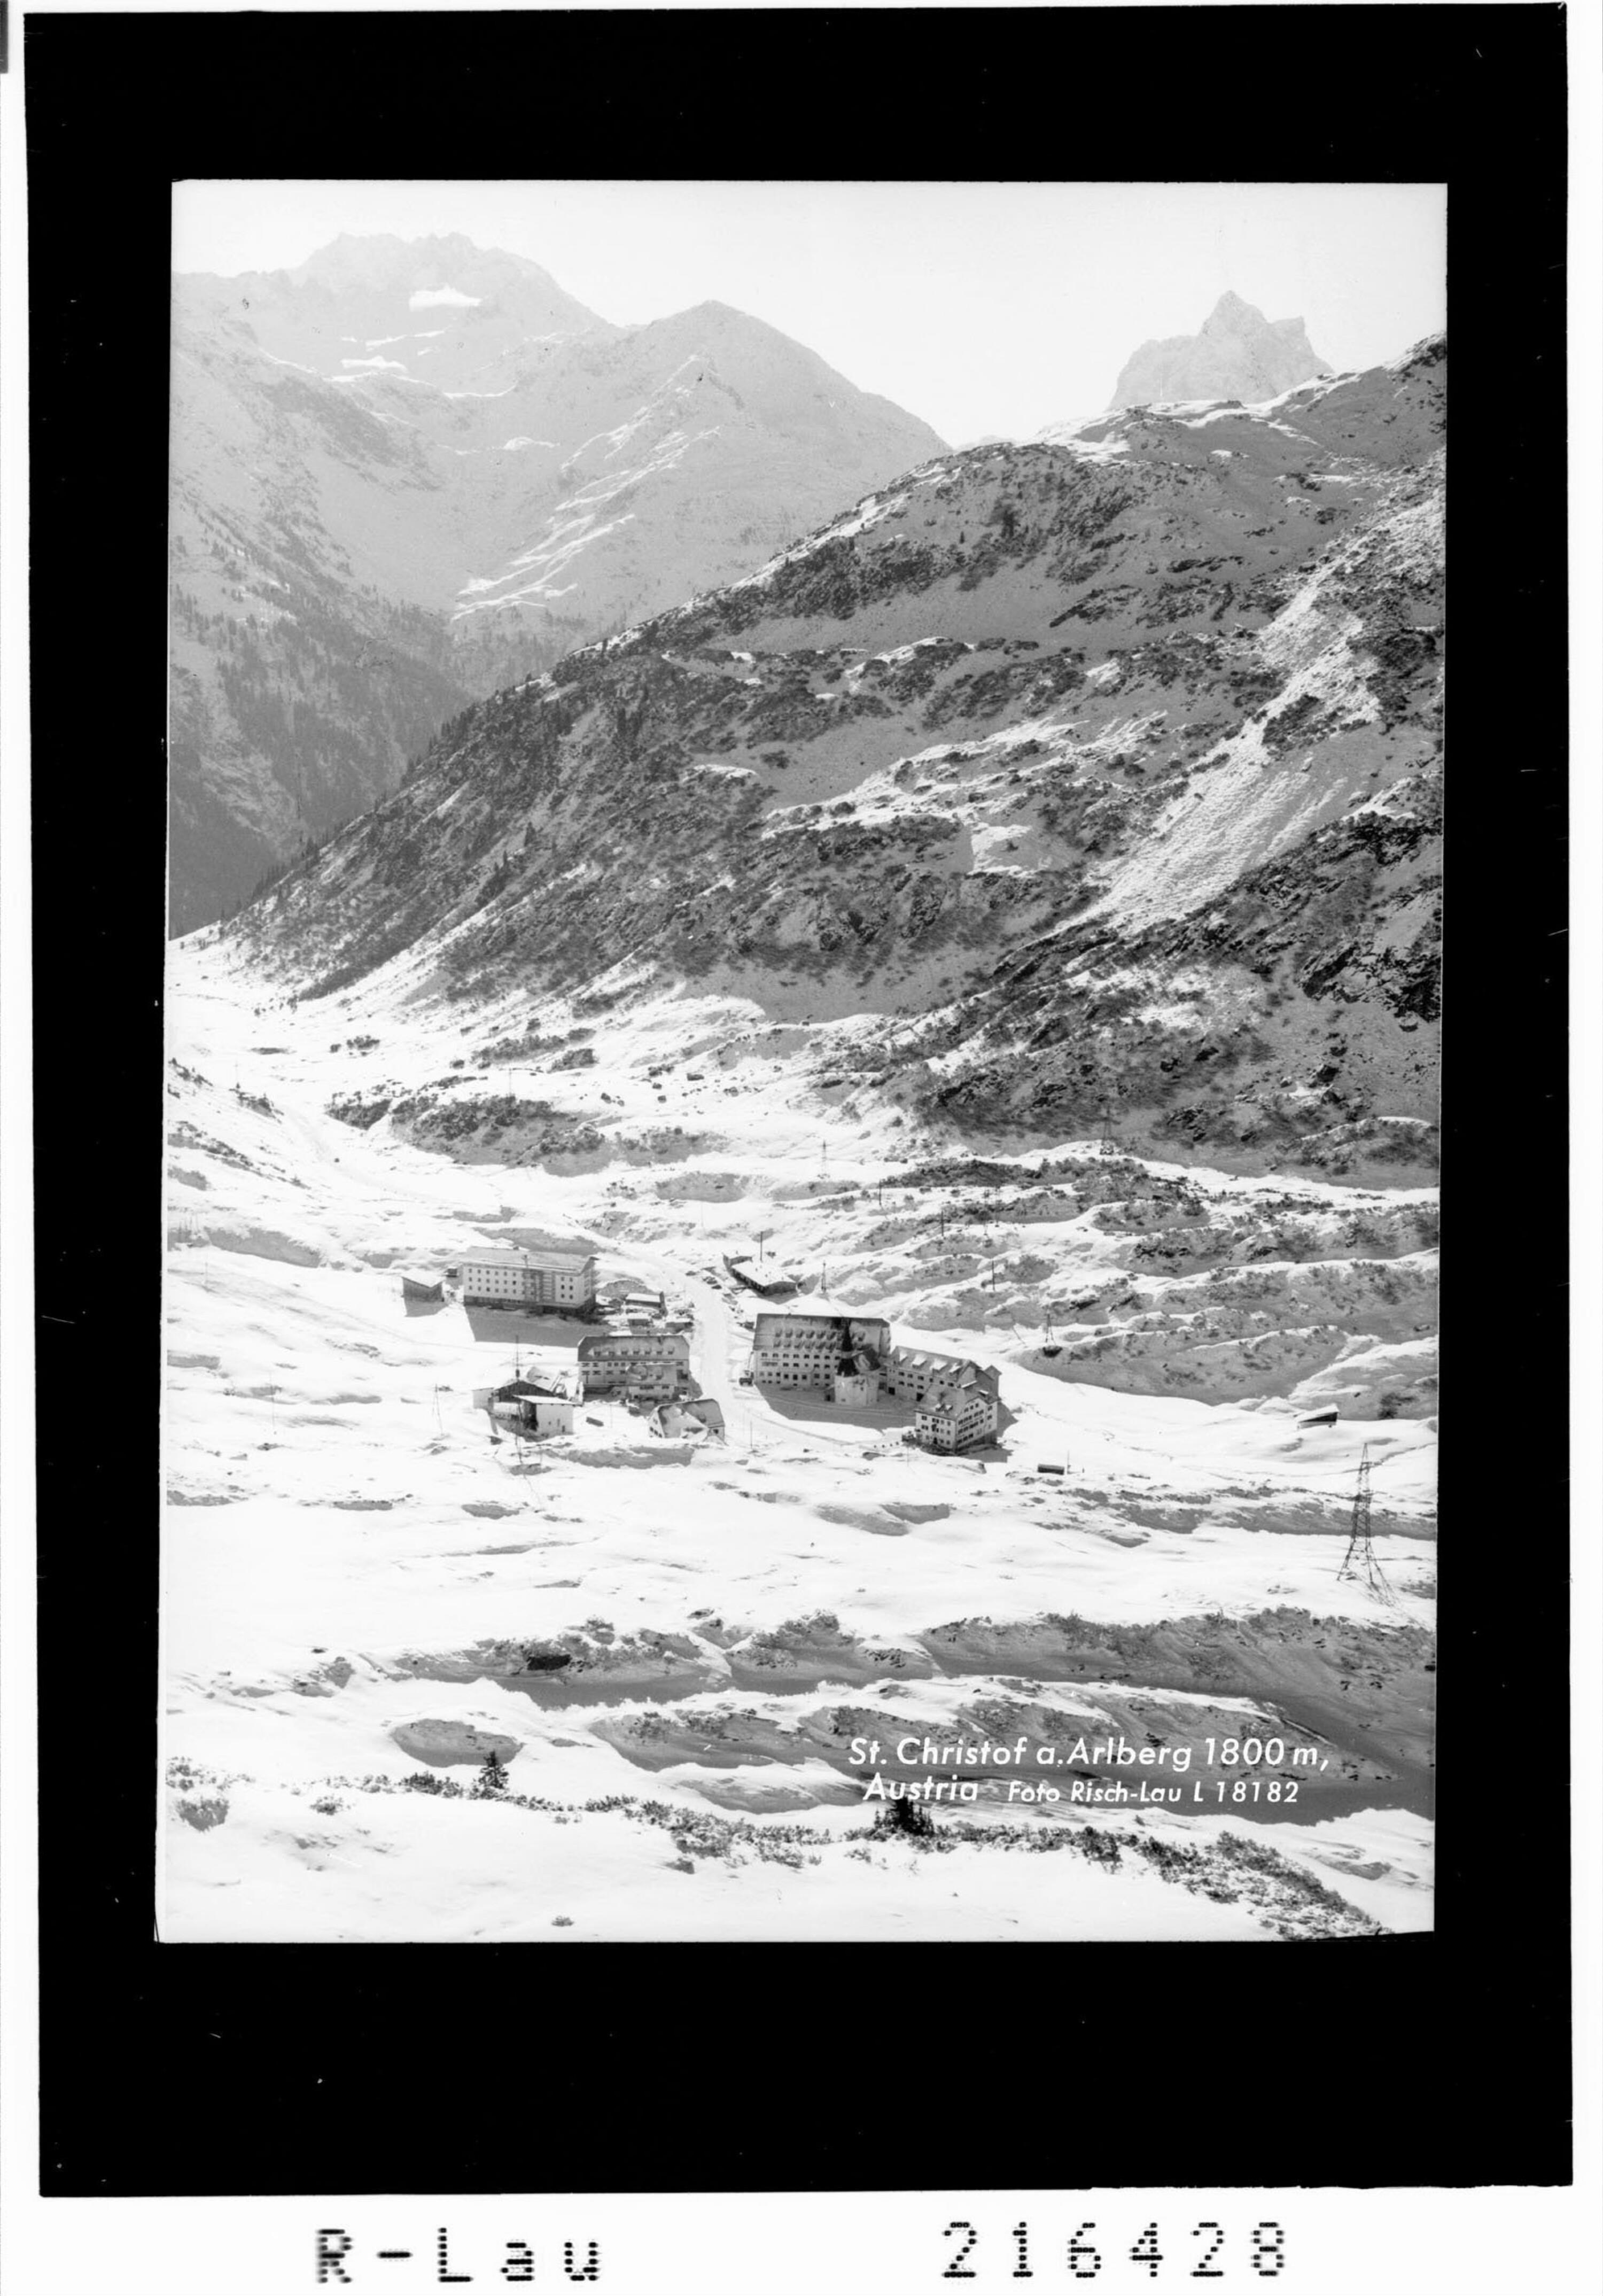 St.Christoph am Arlberg 1800 m, Austria></div>


    <hr>
    <div class=